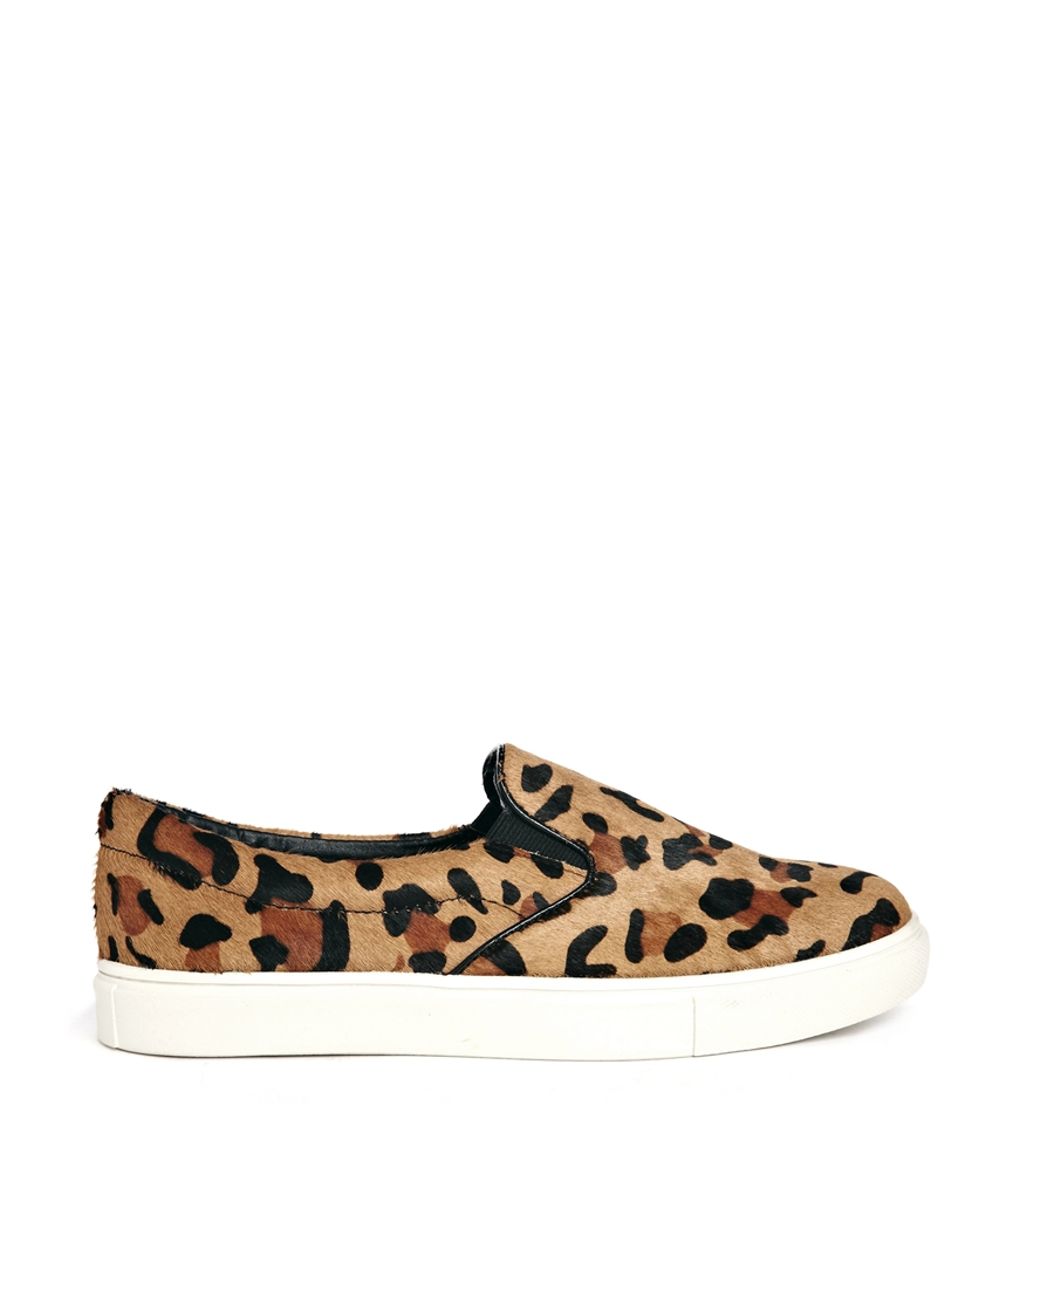 Steve Madden Ecentric Leopard Slip On Sneakers | Lyst